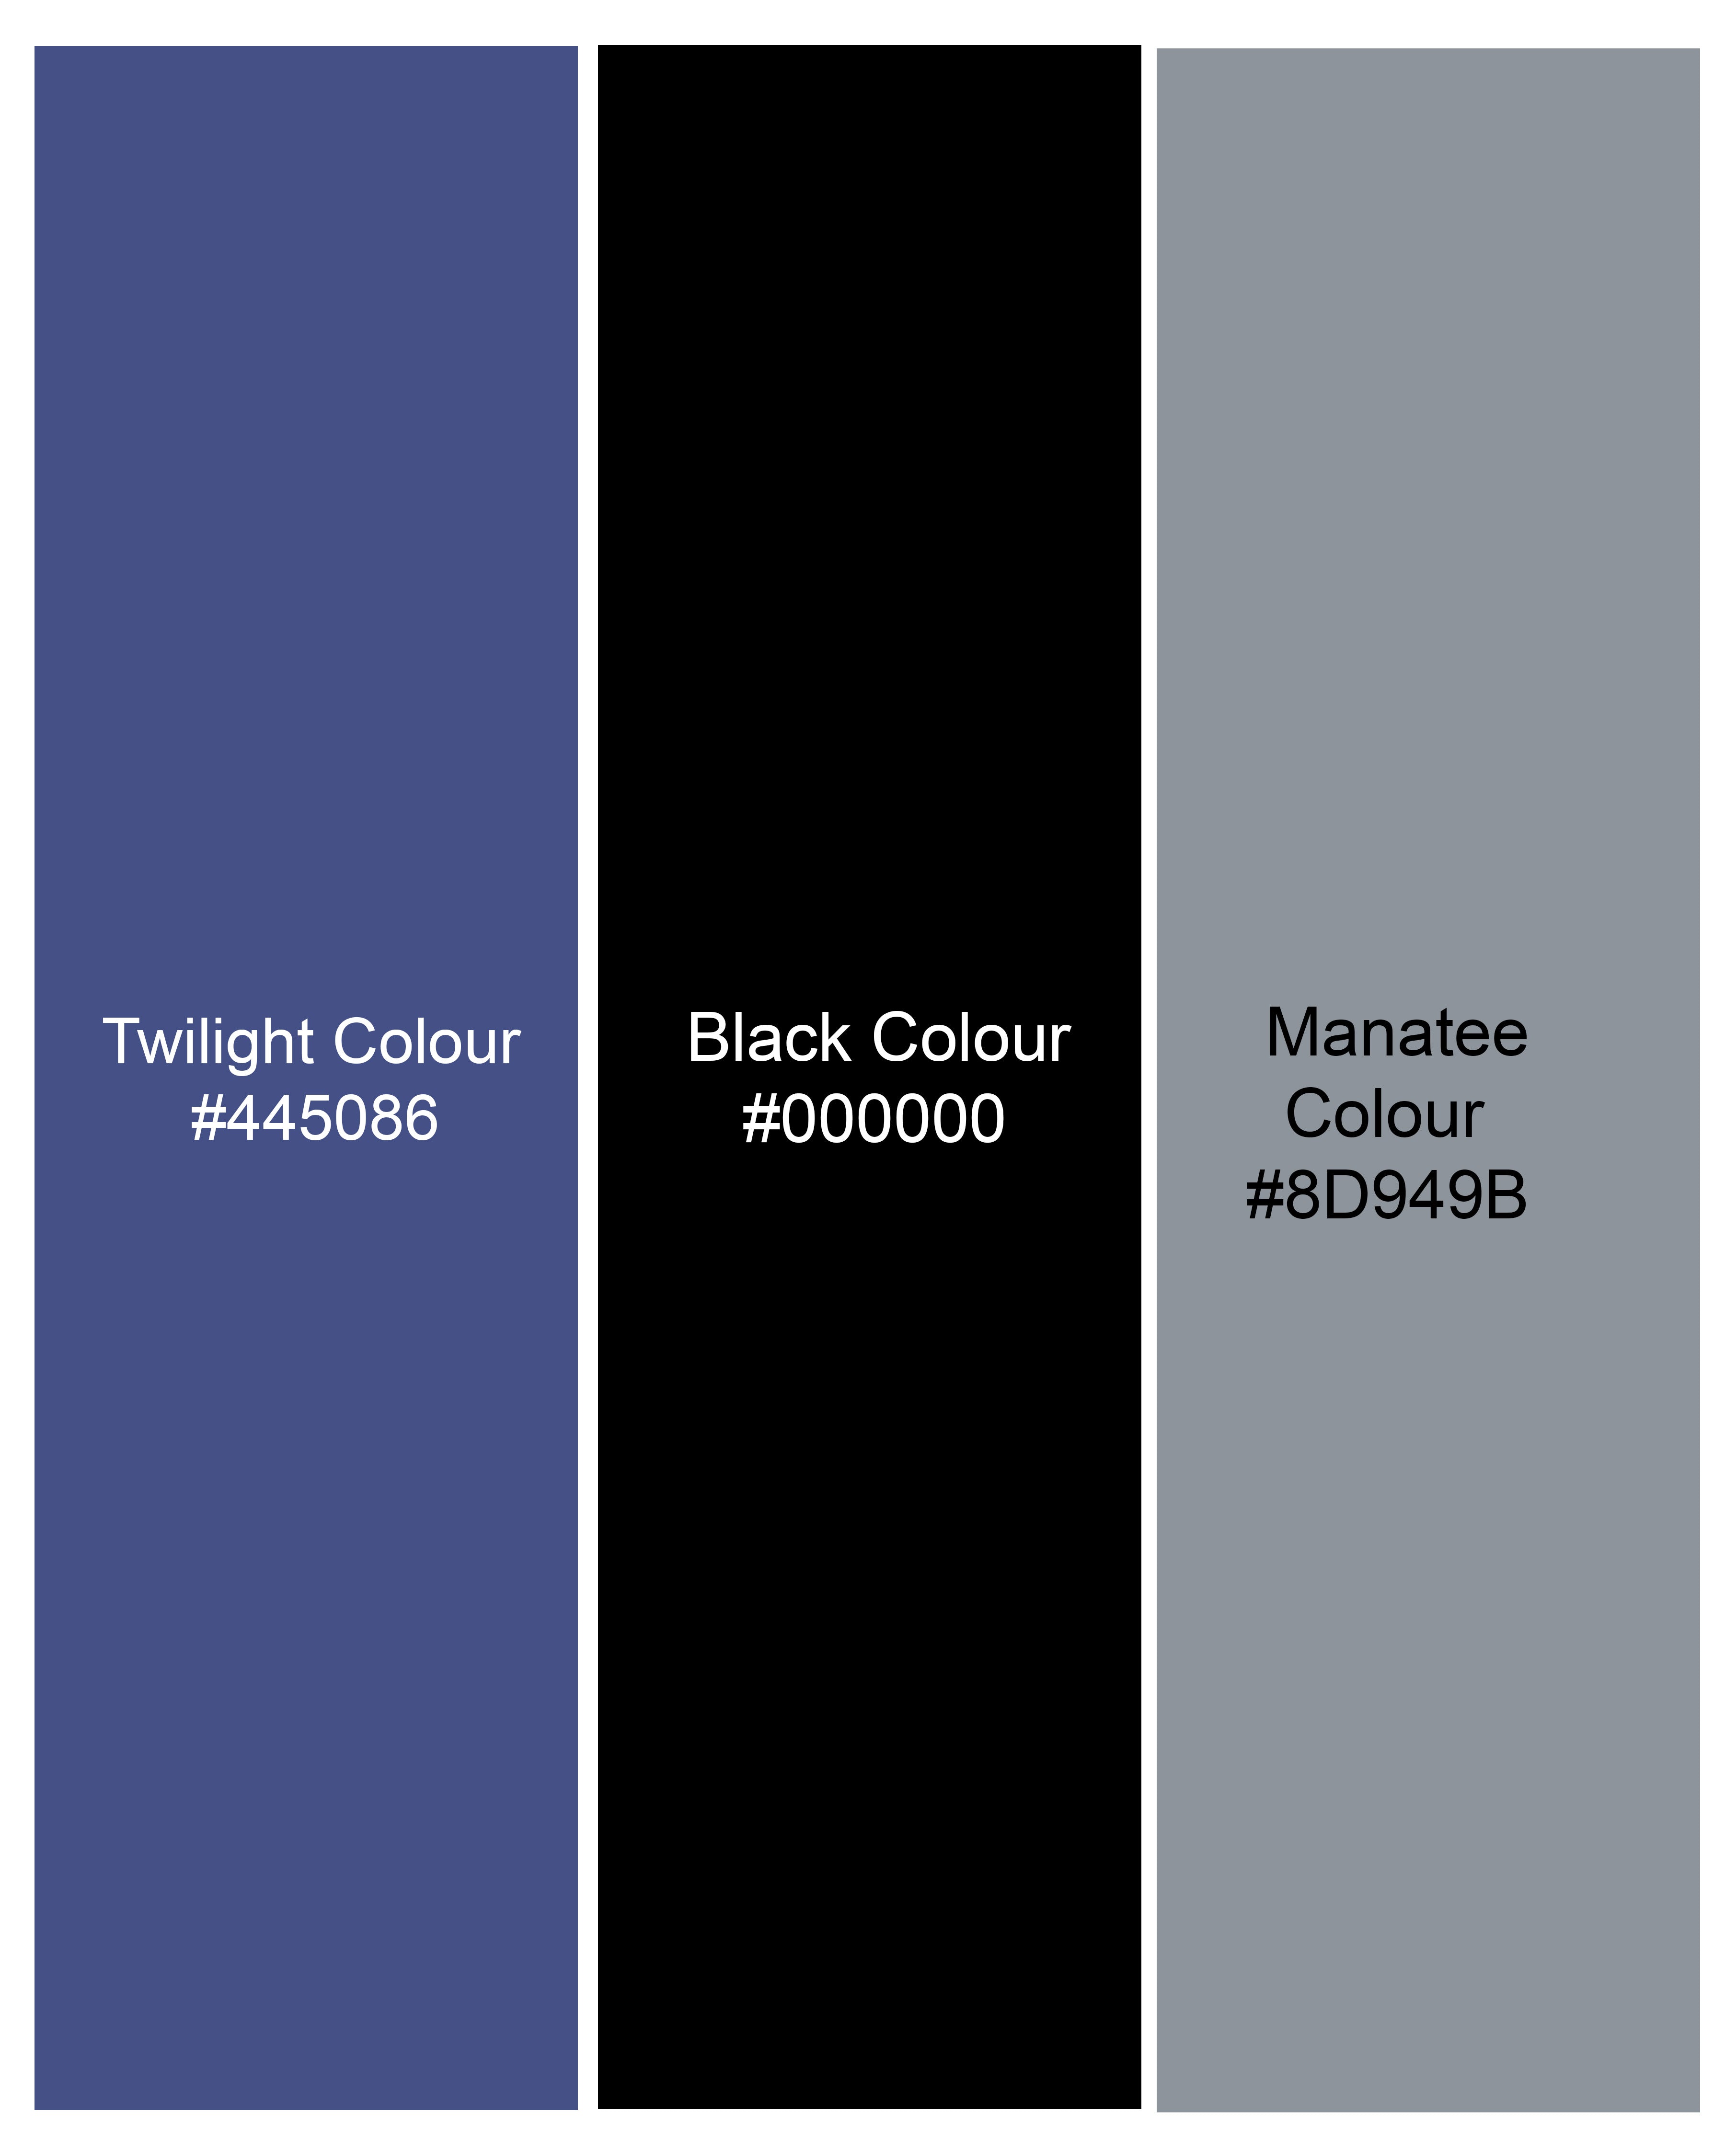 Twilight Blue with Jade Black Striped Jacquard Textured Premium Giza Cotton Shirt 9623-CA-BLE-38,9623-CA-BLE-H-38,9623-CA-BLE-39,9623-CA-BLE-H-39,9623-CA-BLE-40,9623-CA-BLE-H-40,9623-CA-BLE-42,9623-CA-BLE-H-42,9623-CA-BLE-44,9623-CA-BLE-H-44,9623-CA-BLE-46,9623-CA-BLE-H-46,9623-CA-BLE-48,9623-CA-BLE-H-48,9623-CA-BLE-50,9623-CA-BLE-H-50,9623-CA-BLE-52,9623-CA-BLE-H-52